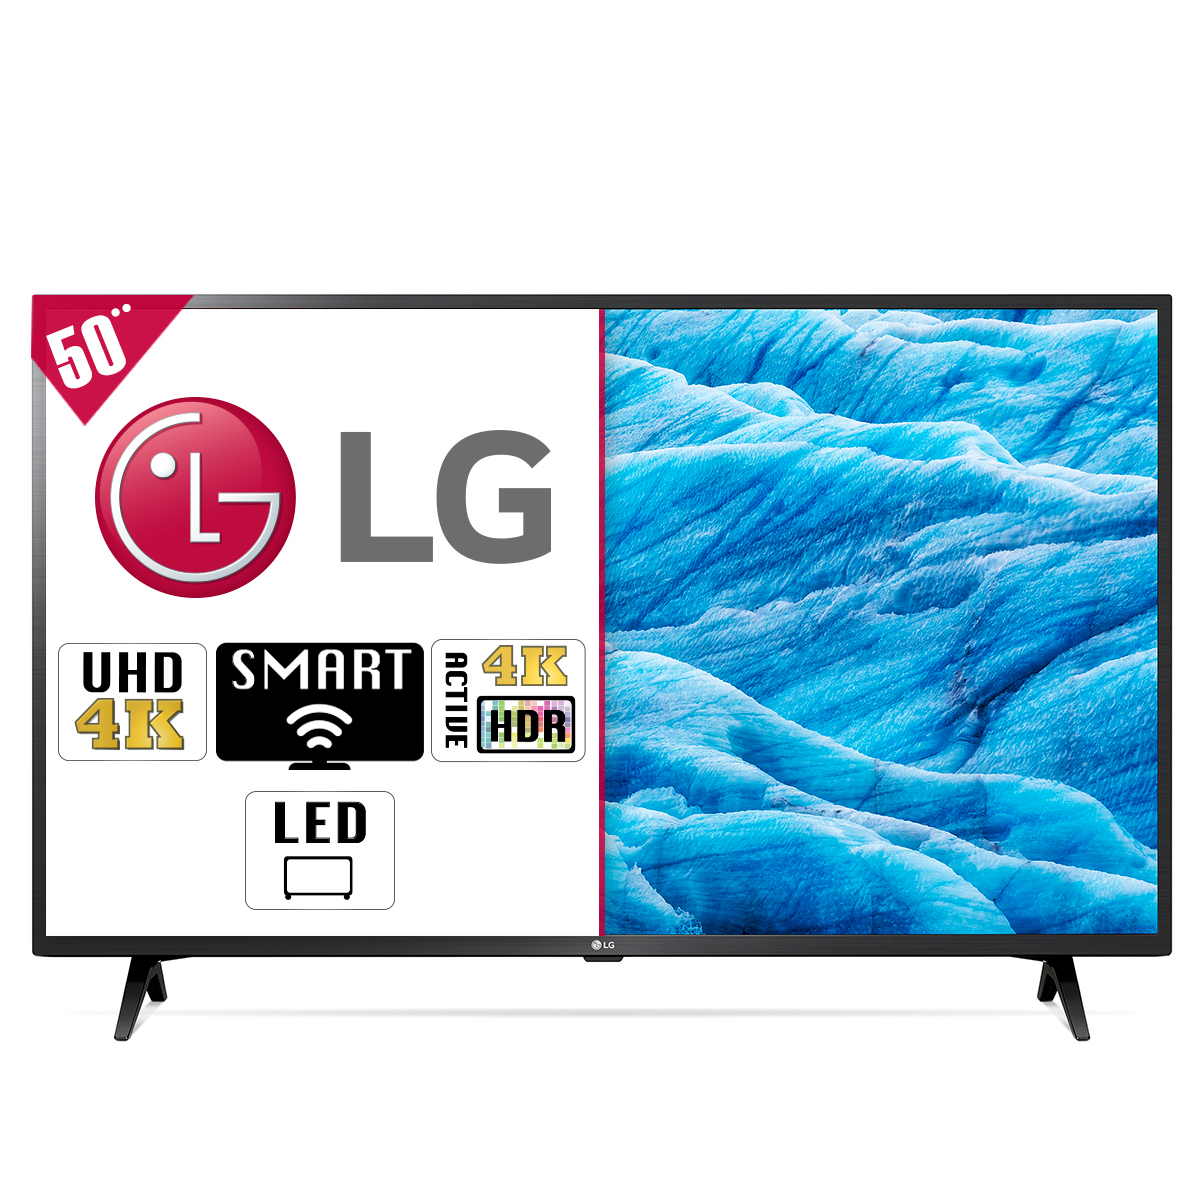 Pantalla LG 50 Pulgadas Smart Tv 4k Uhd Thinq Webos Bluetooh